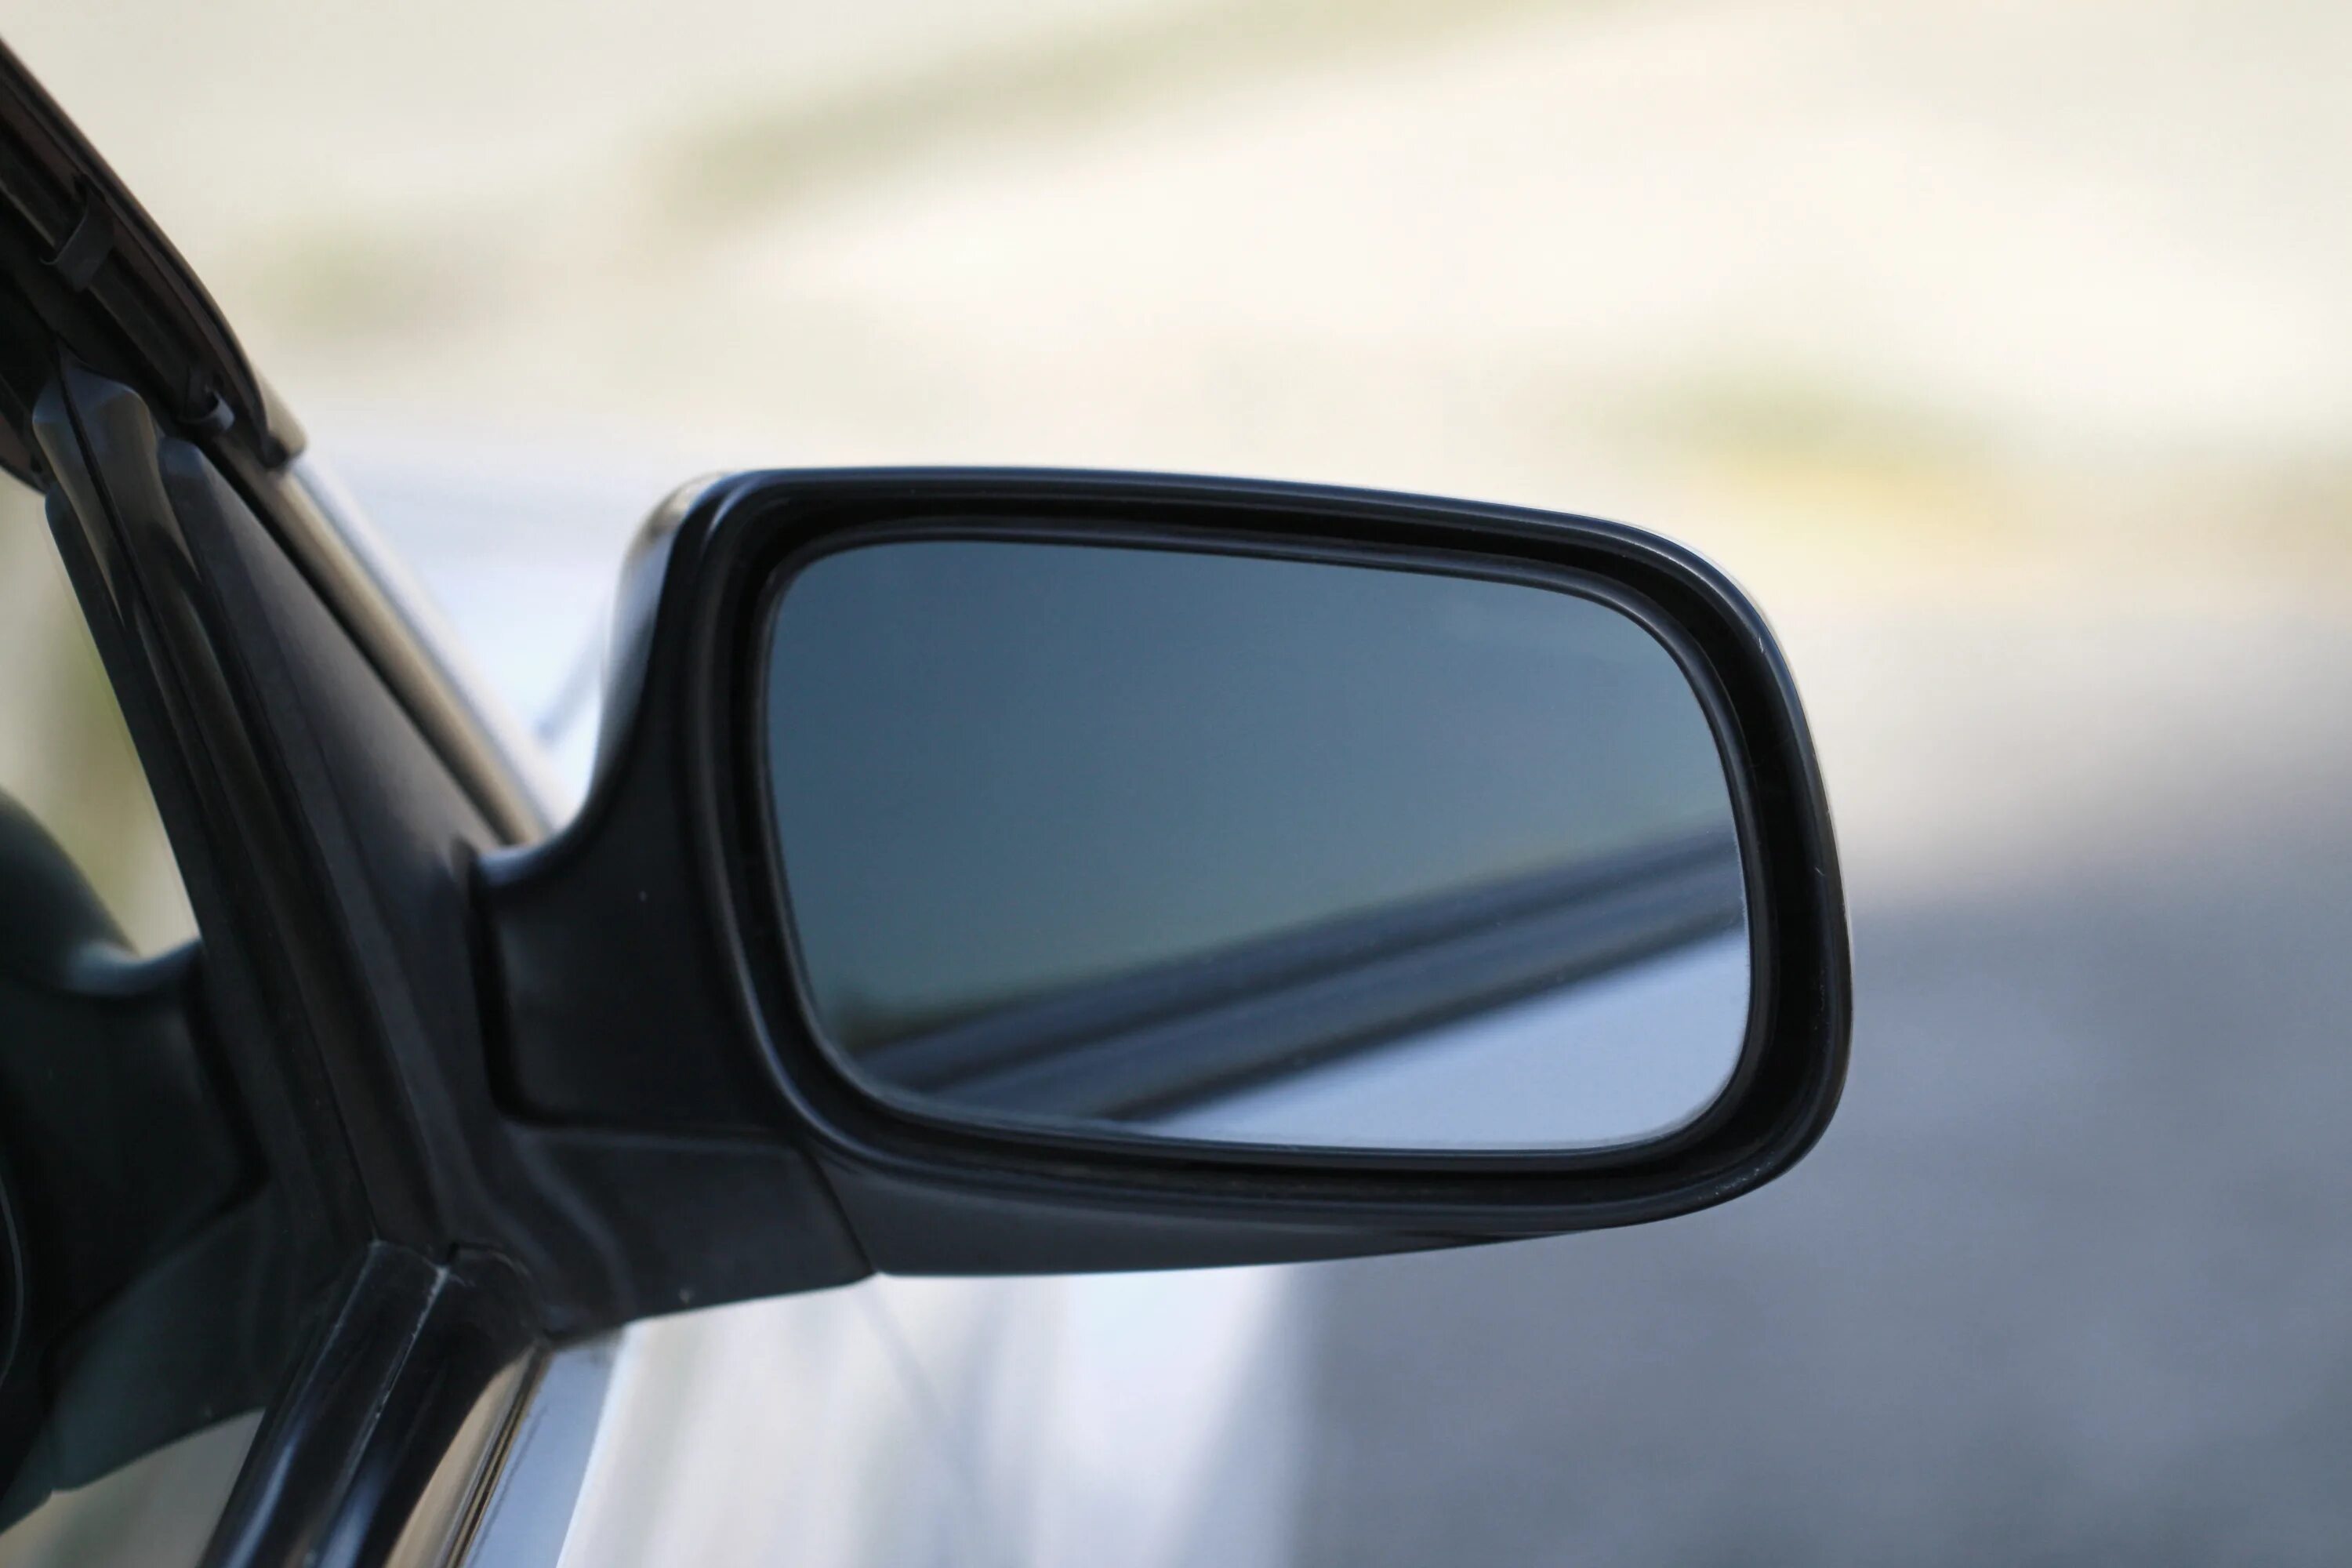 With mirror view. Боковое зеркало автомобиля. Зеркало машины боковое. Зеркало в машине.